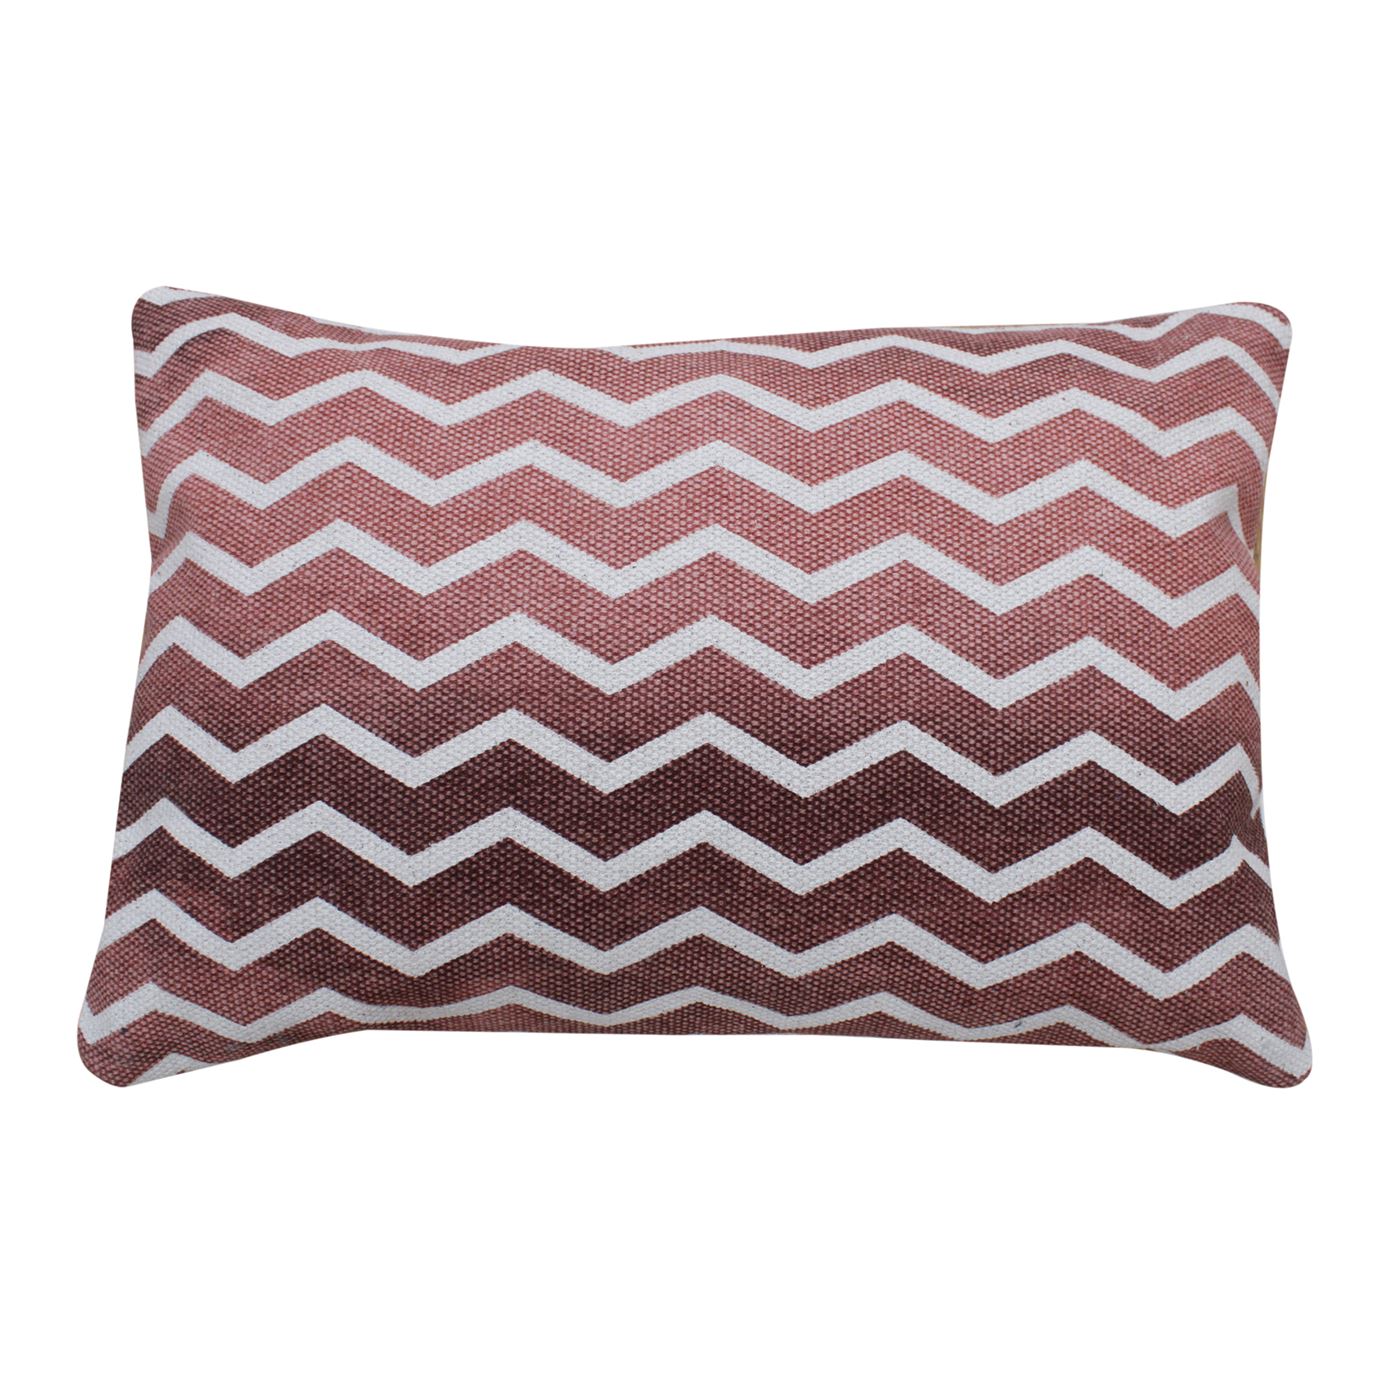 Rodez Pillow, Cotton, Printed, Brick, Pitloom, Flat Weave